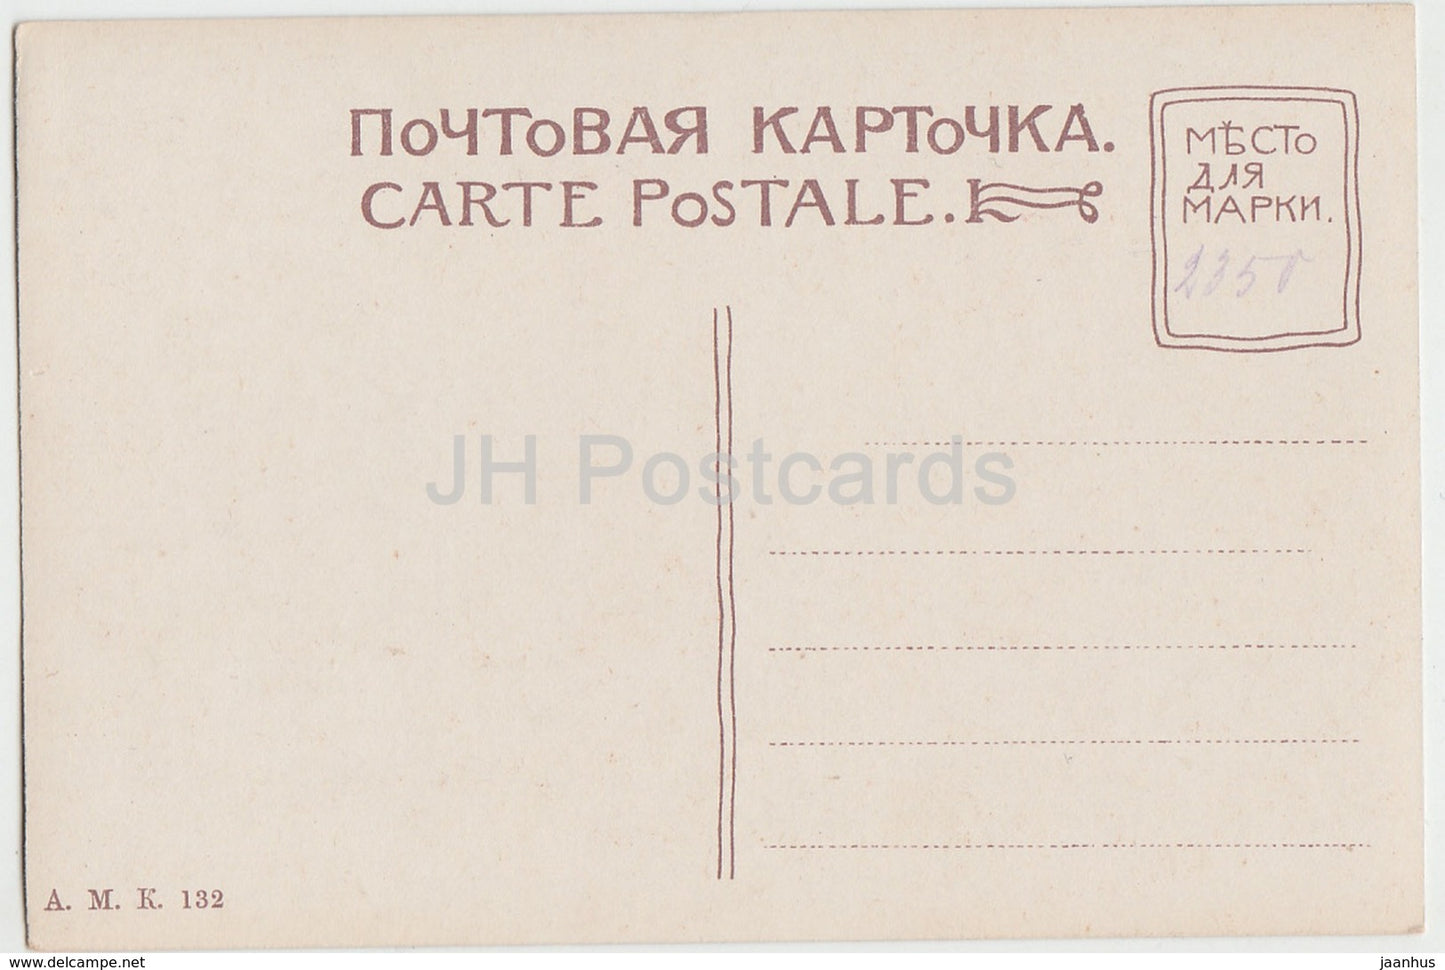 St. Petersbourg - St Petersburg - Ligovo Railway Station - 132 - old postcard - Imperial Russia - unused